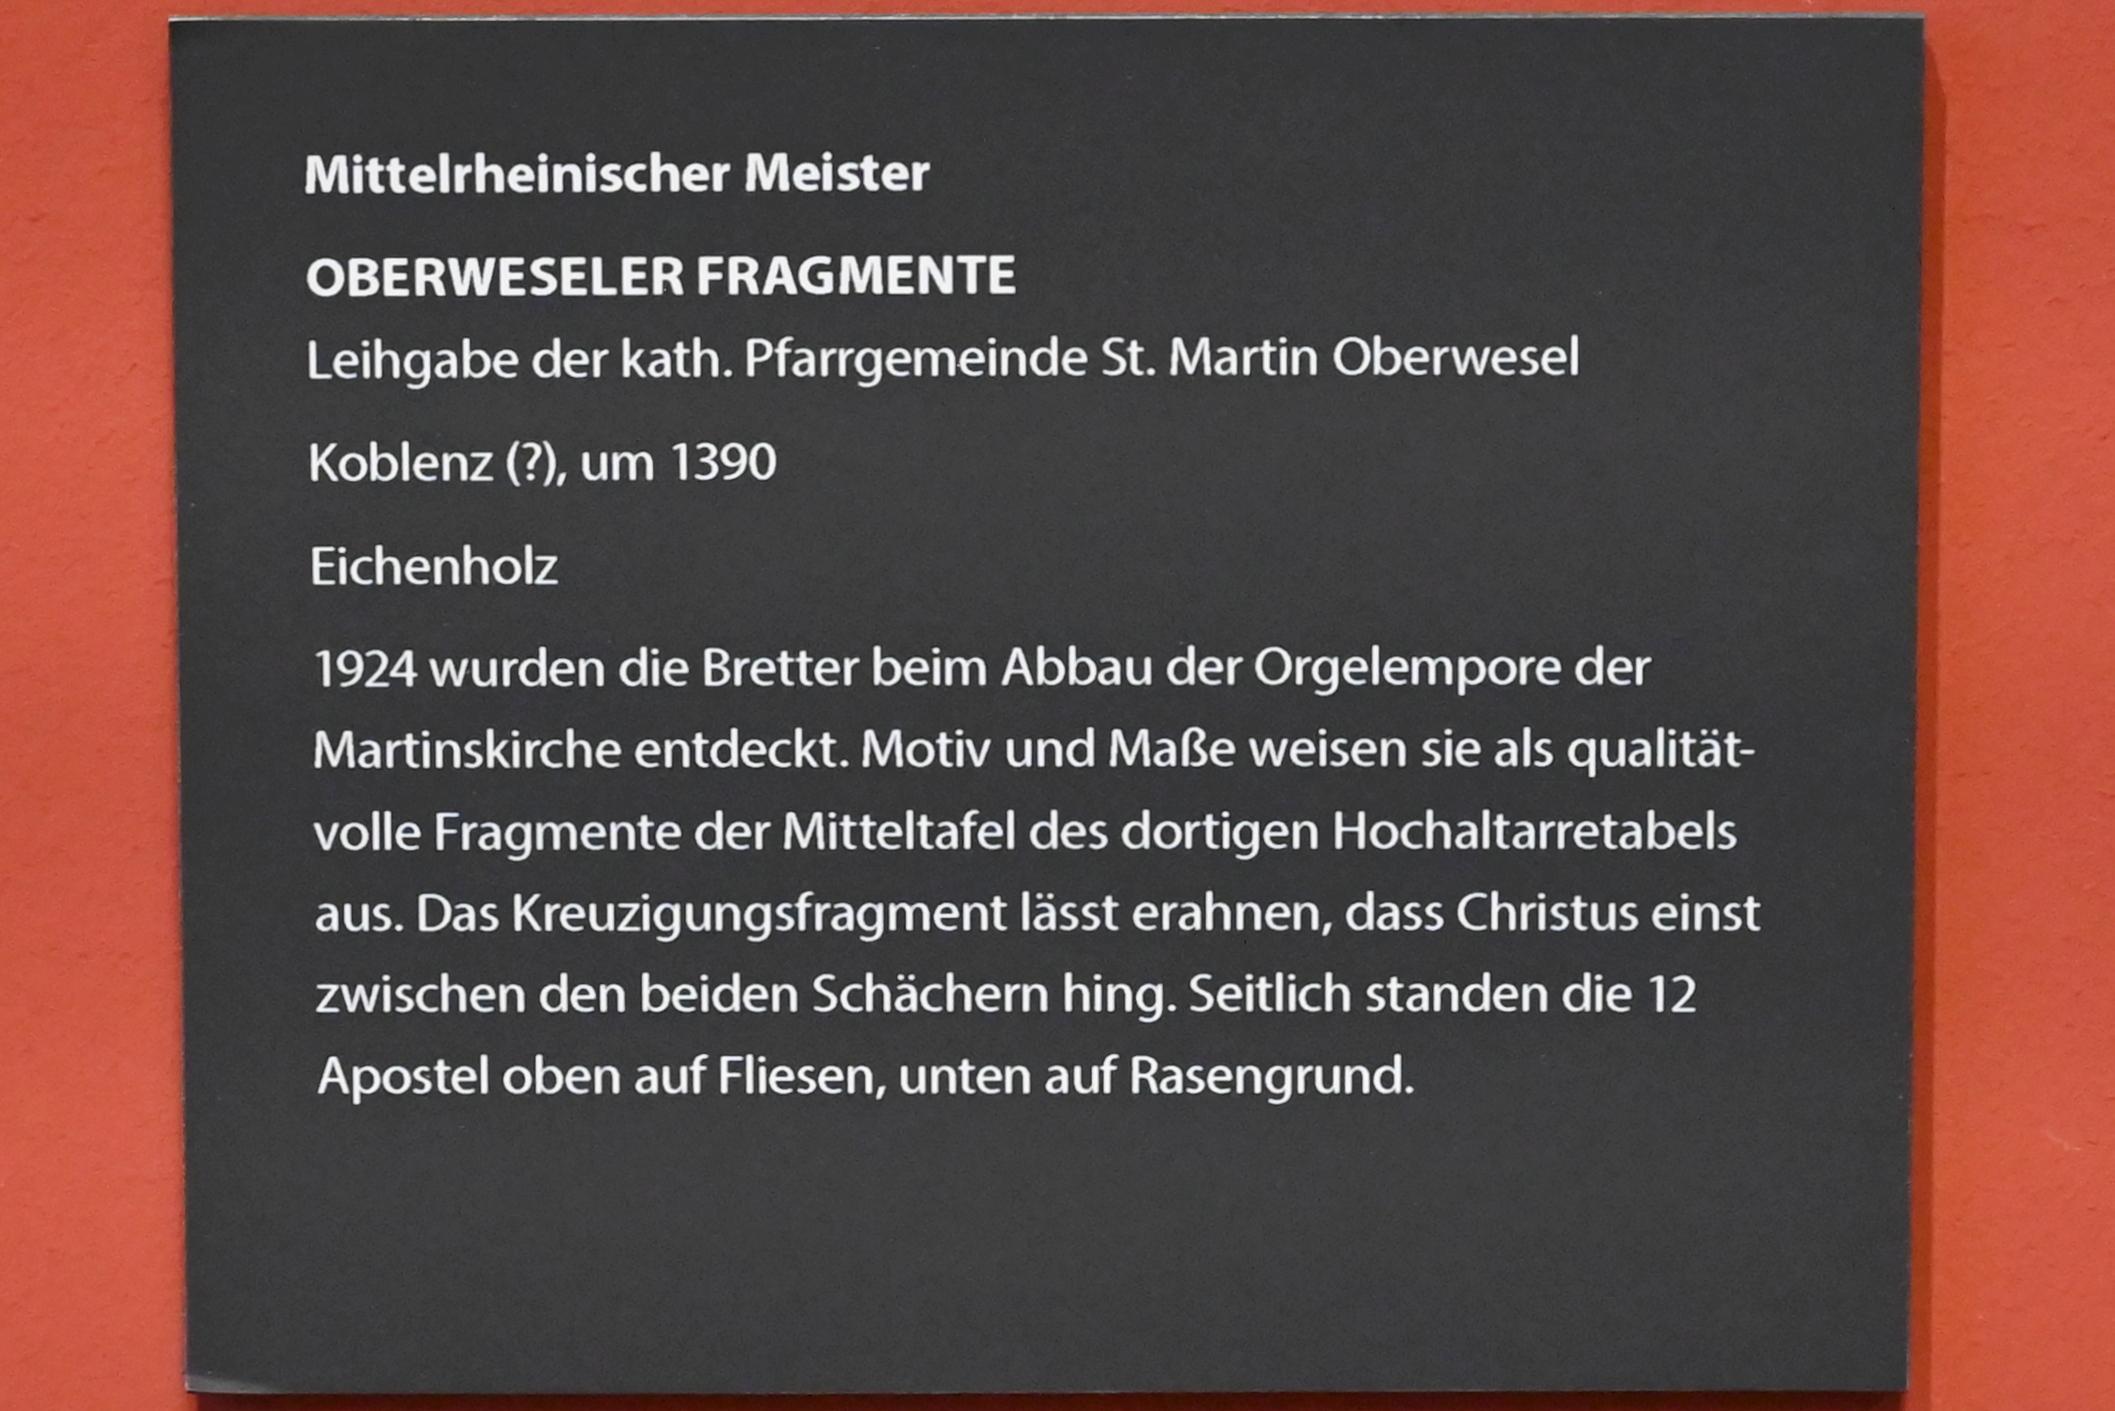 Oberweseler Fragmente, Oberwesel, Kirche St. Martin, jetzt Darmstadt, Hessisches Landesmuseum, Saal 15, um 1390, Bild 3/3